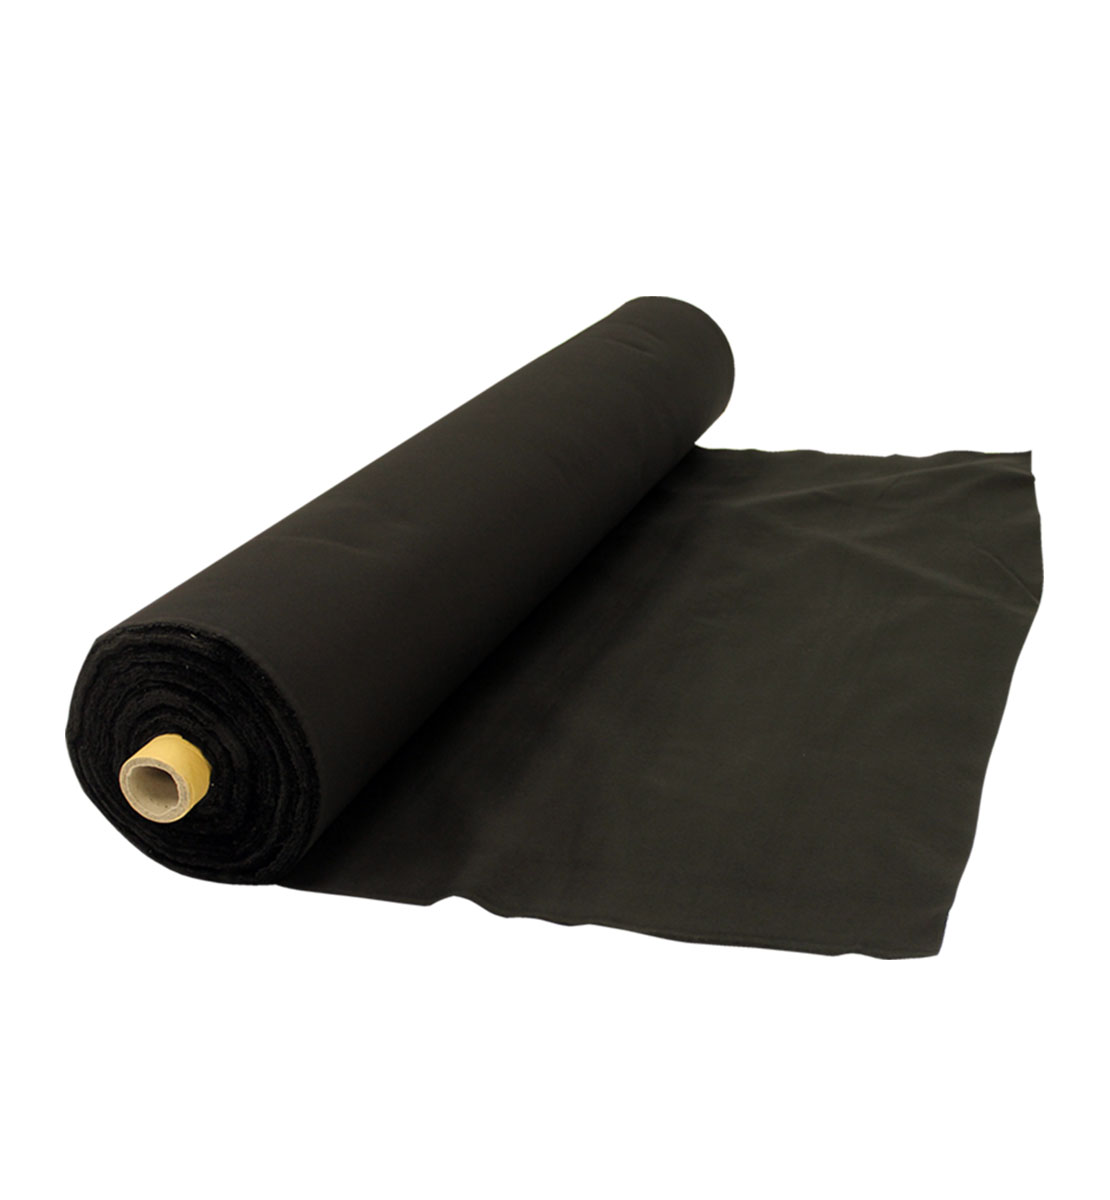 Wholesale Luxor Stretch Egyptian Cotton Fabric Black 100 yard rolls